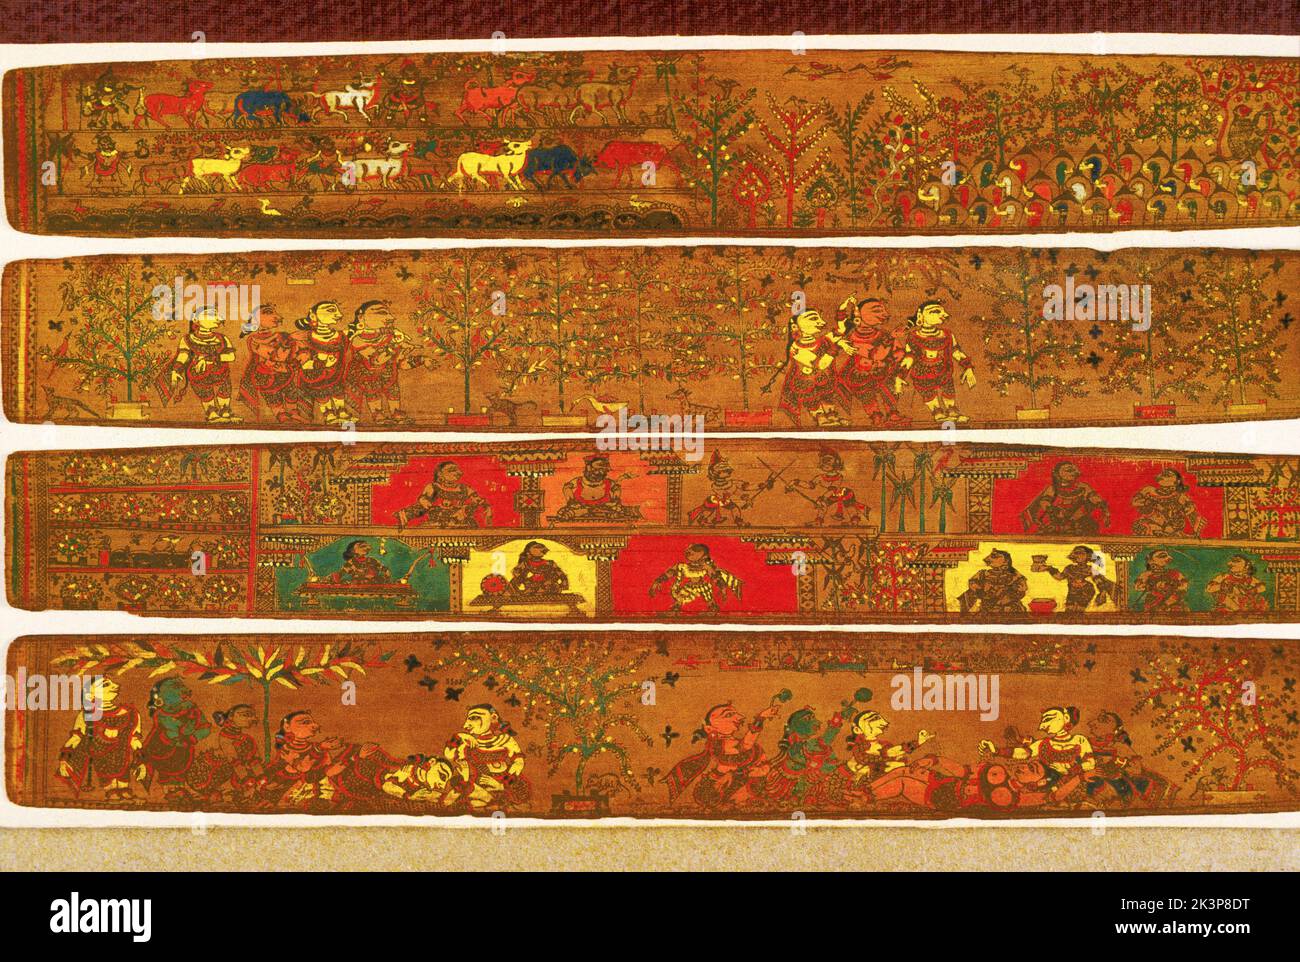 India: Orissa, 18th century, Palm leaf manuscript, Rasa poem book text and pictures Stock Photo